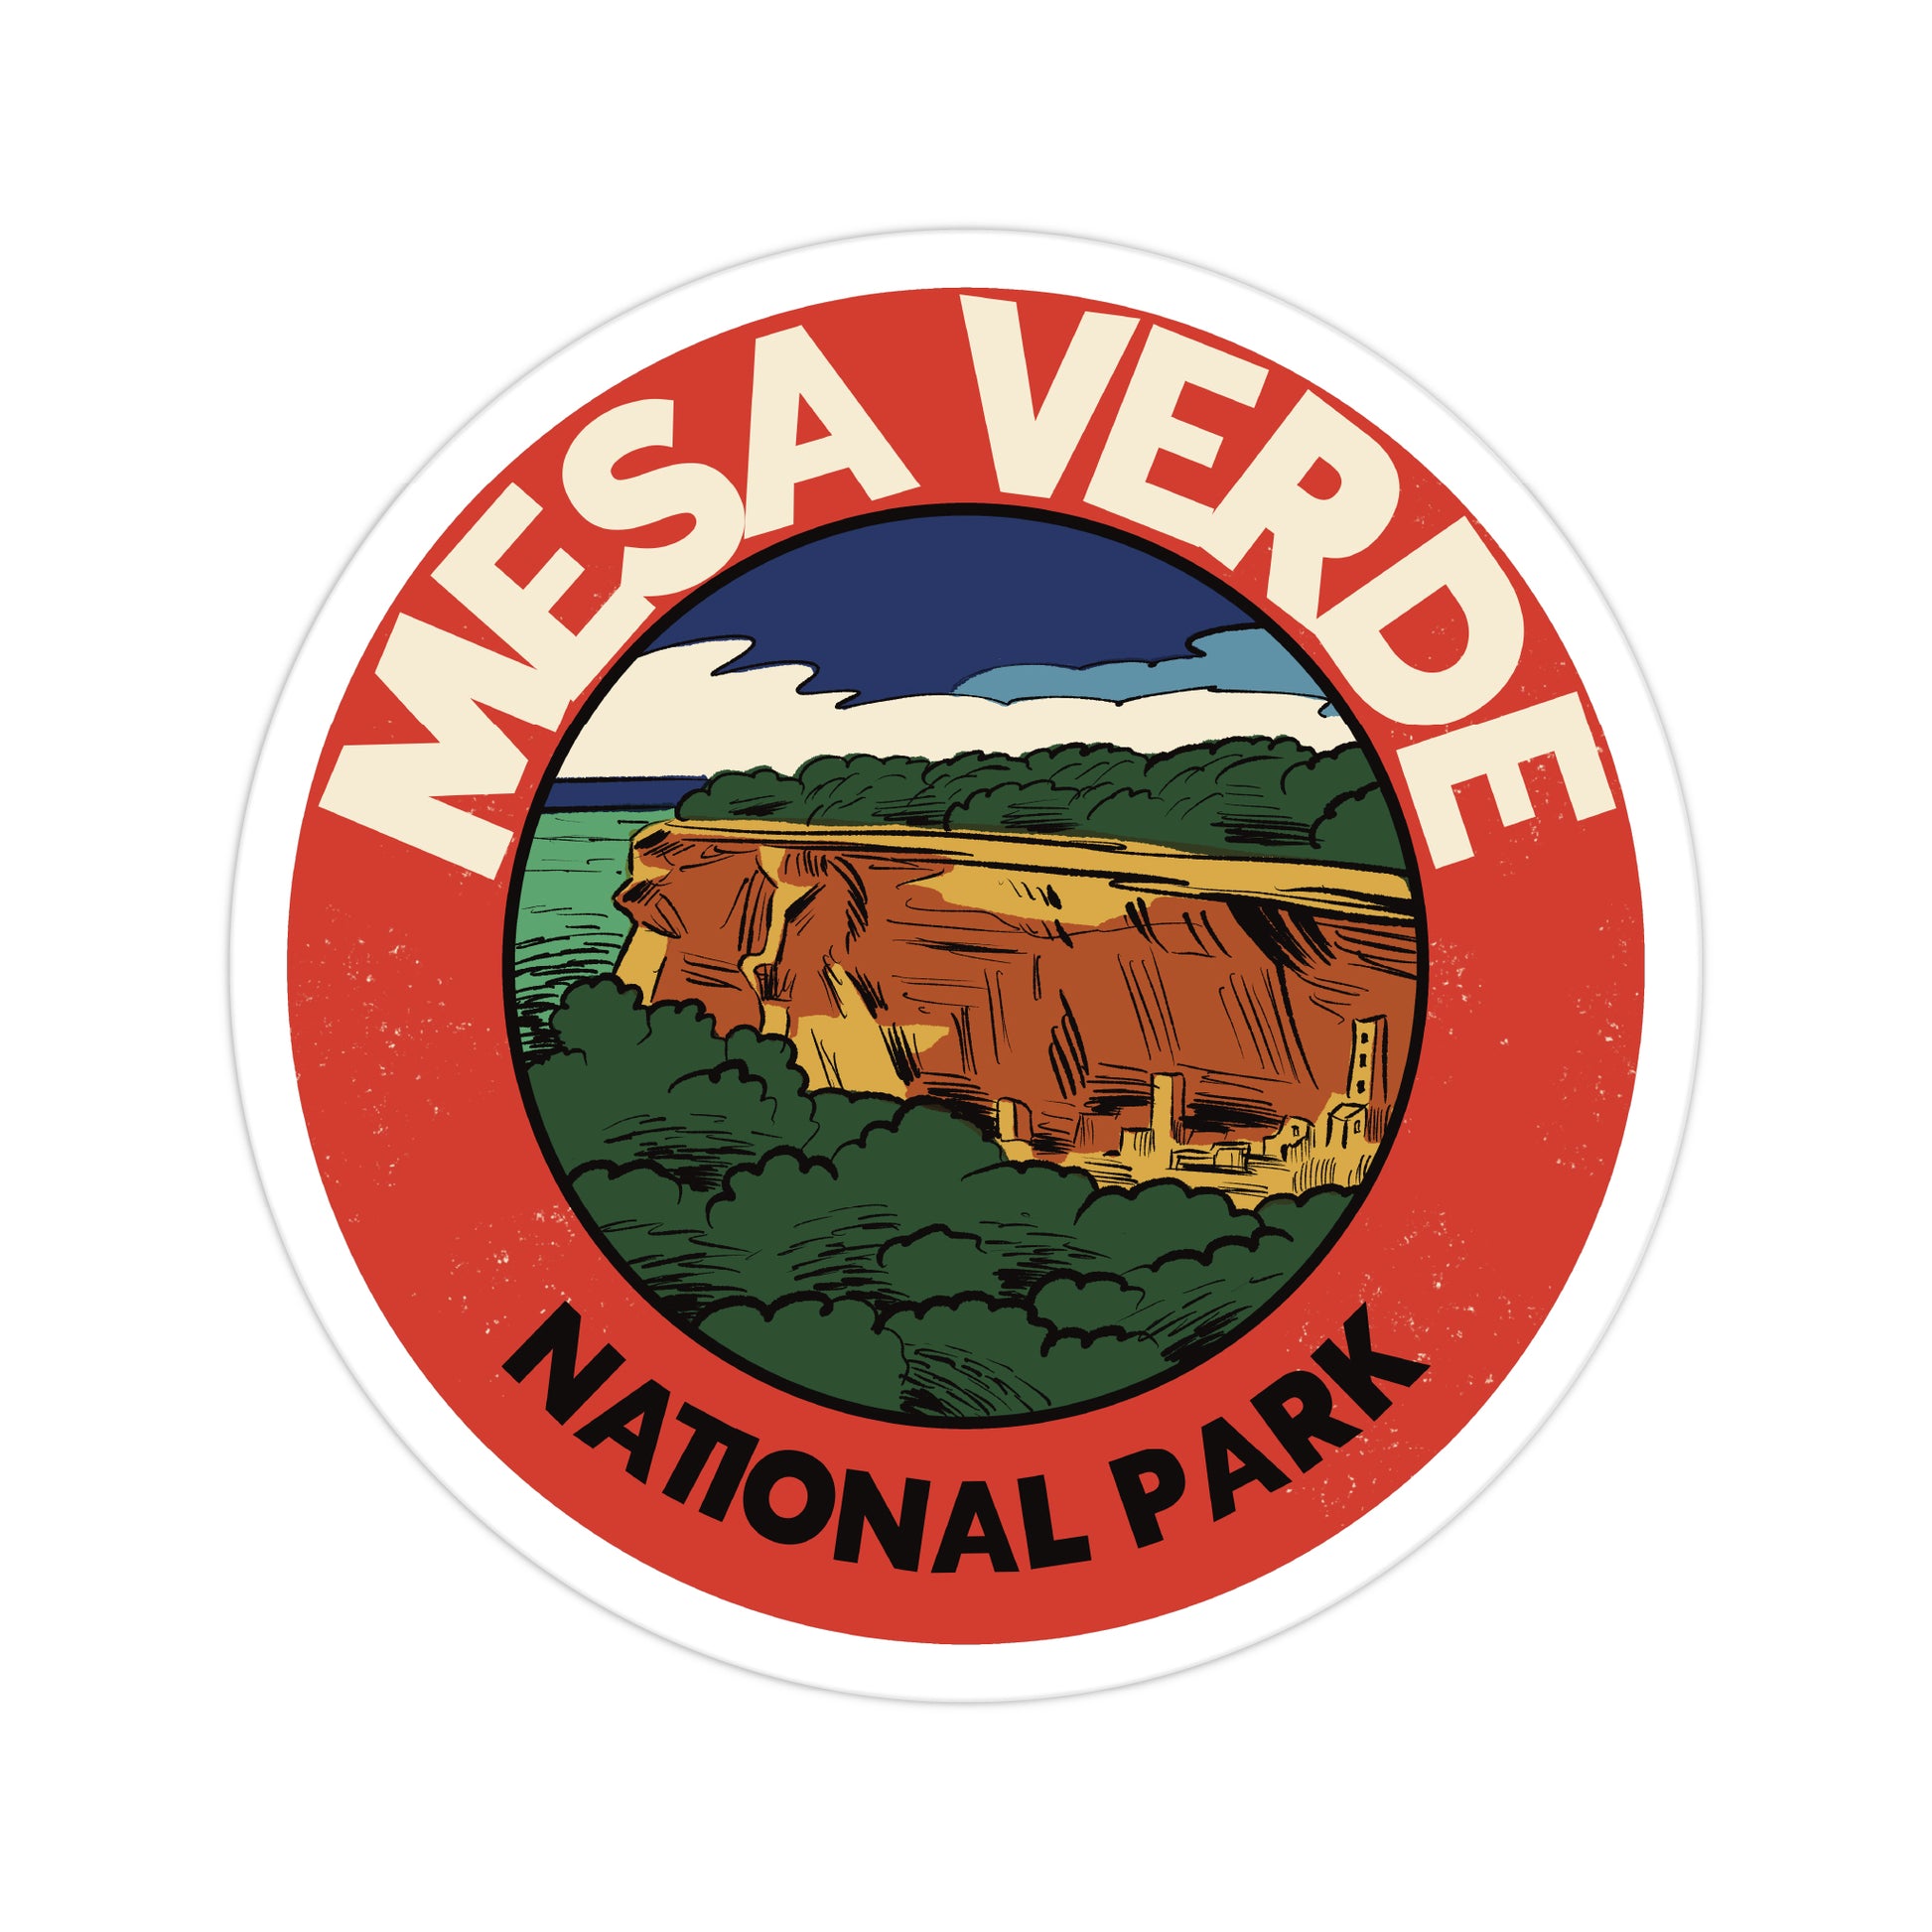 A sticker of Mesa Verde National Park